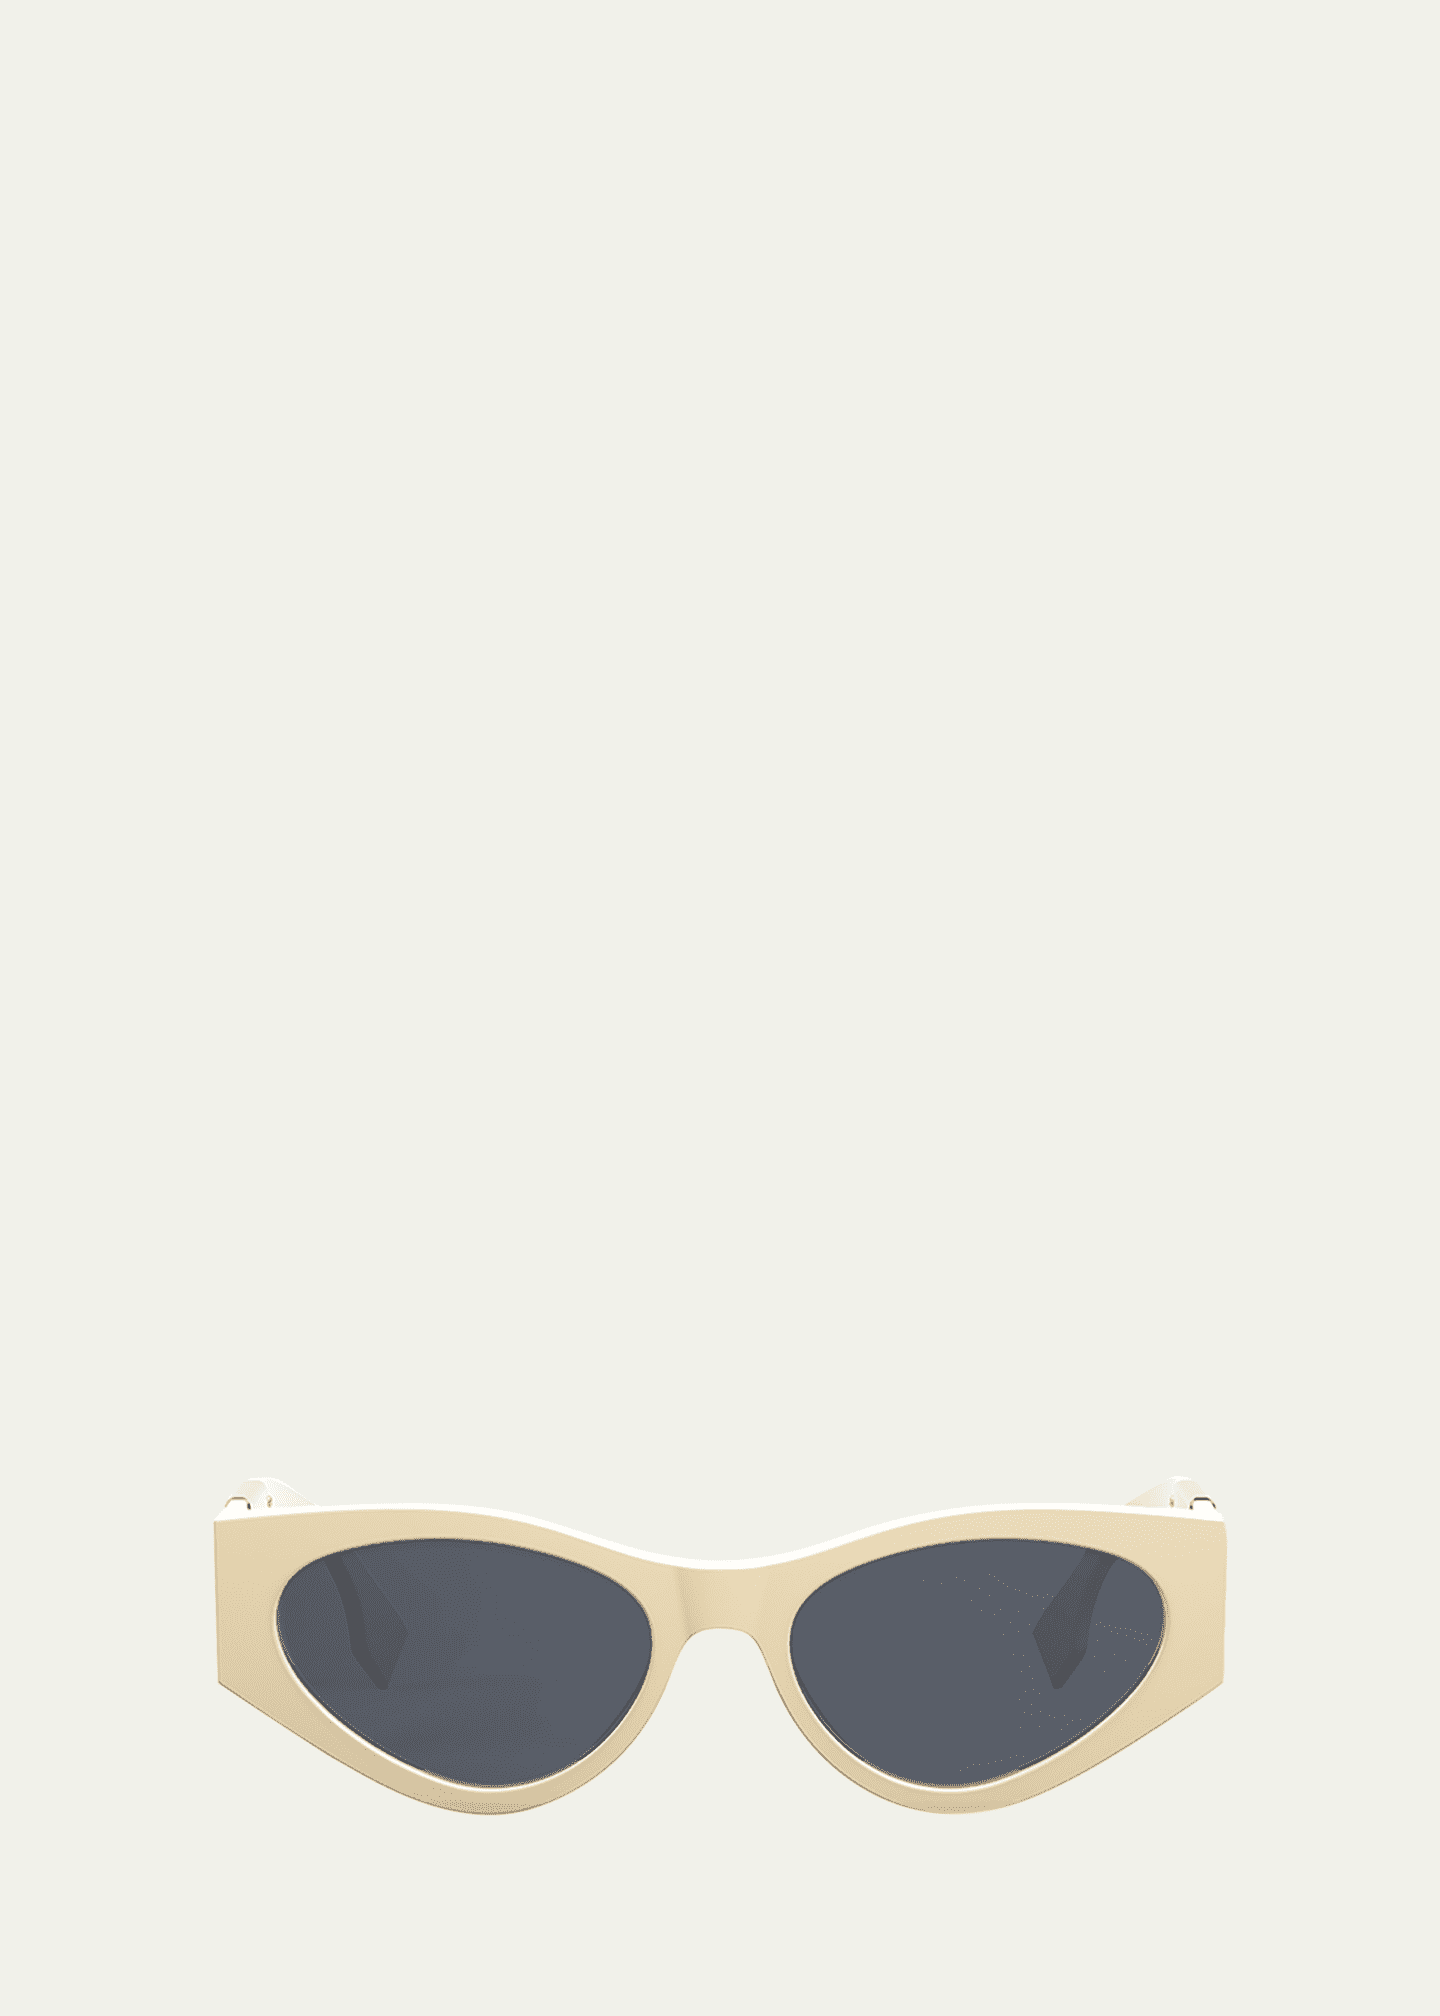 fendi sunglasses on face